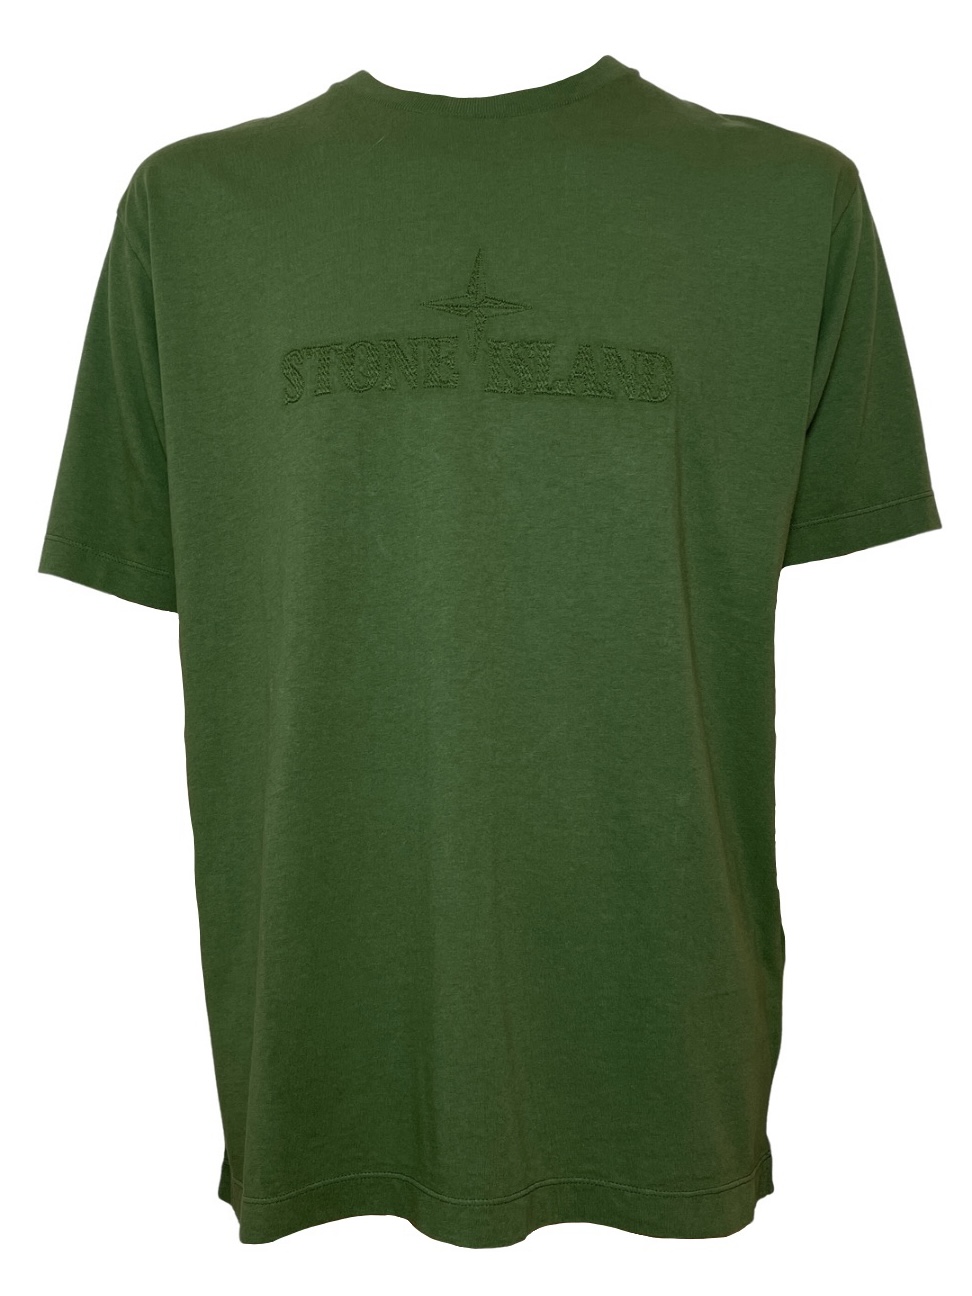 【STONE ISLAND】Green cotton T-shirt with ton sur ton embroidered logo